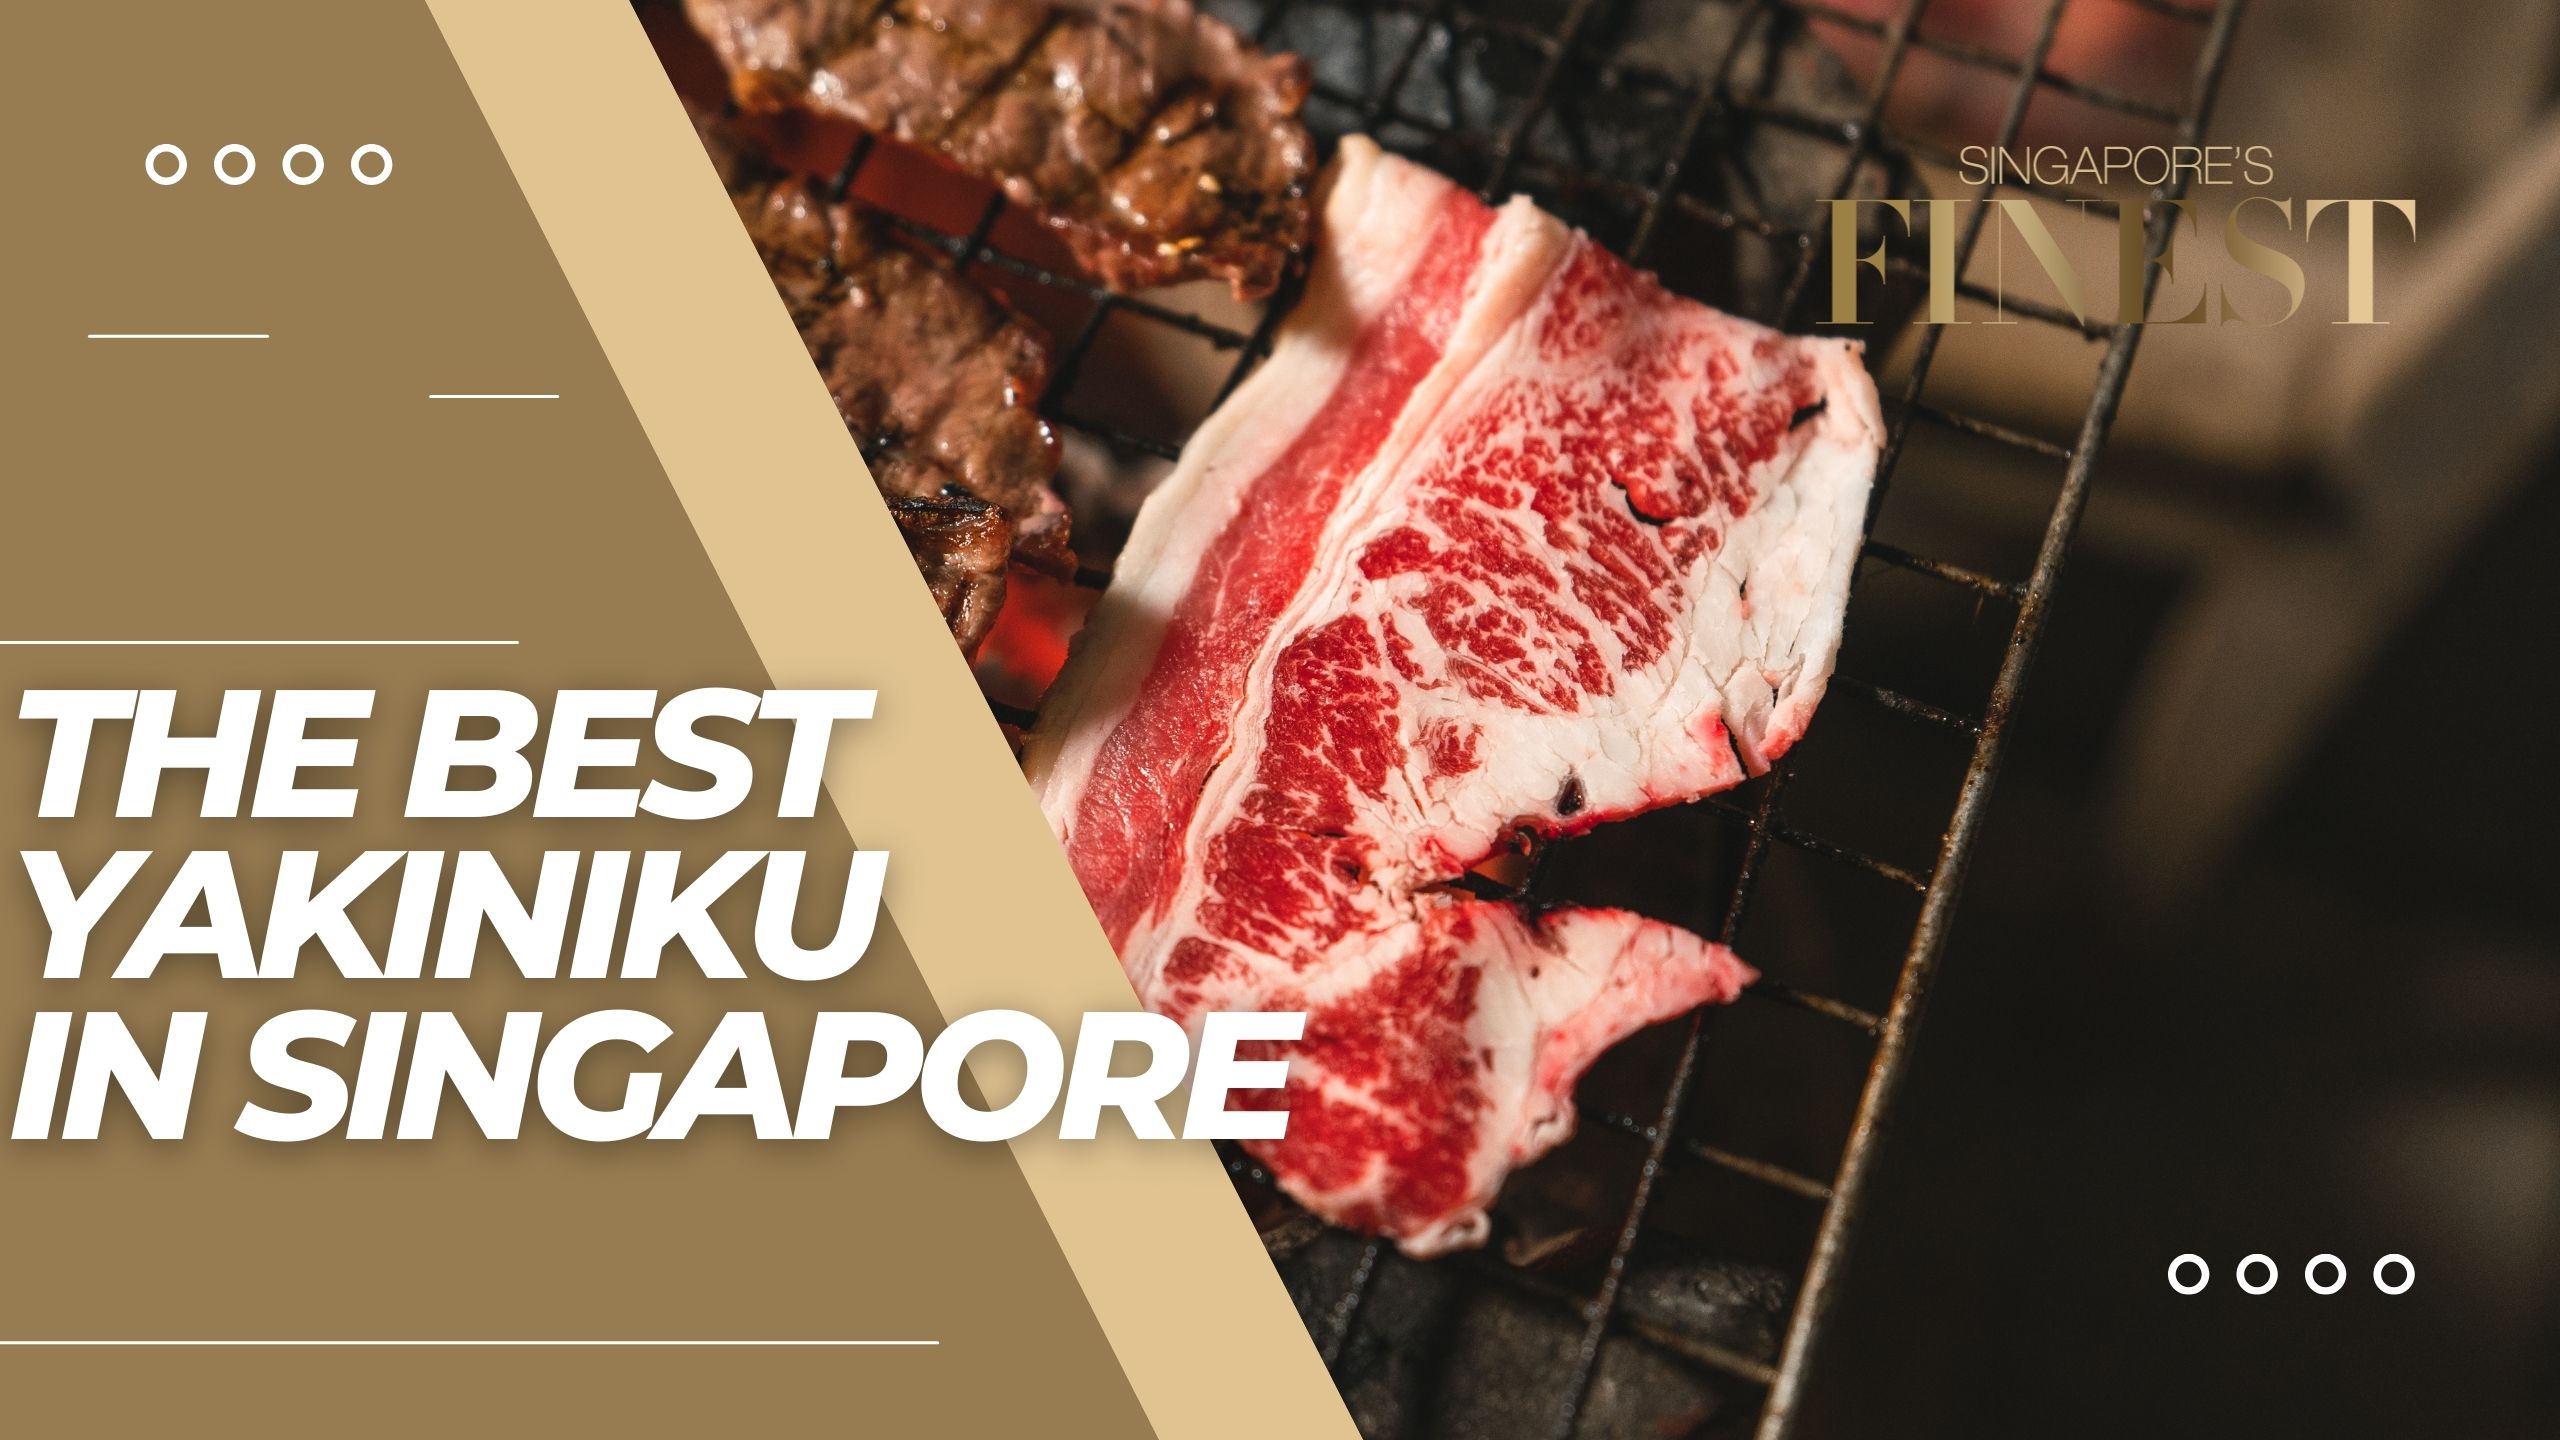 The Finest Yakiniku Restaurants in Singapore